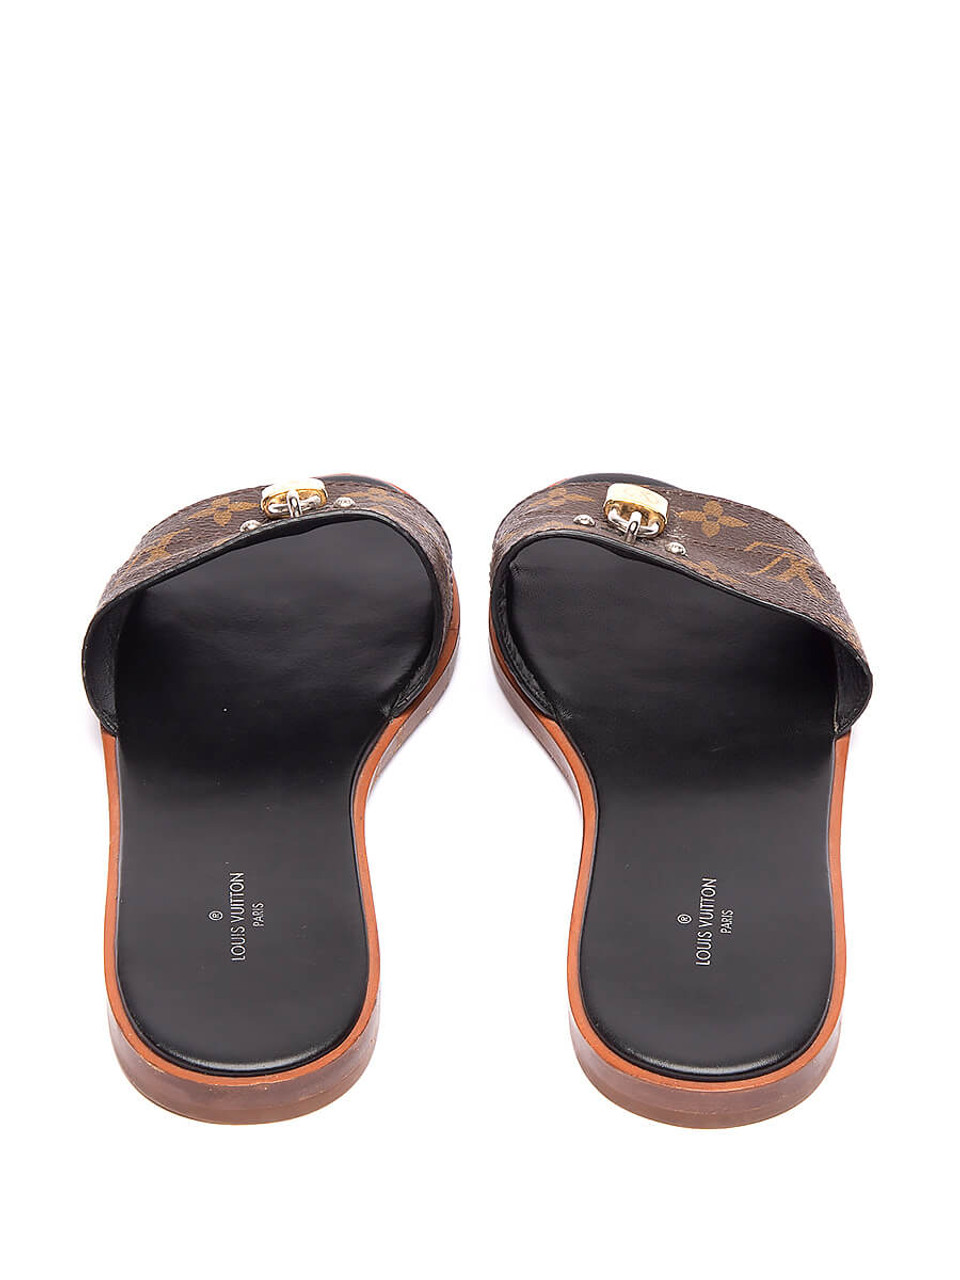 Louis Vuitton Women's Lock It Mule Sandals, Size 4.5 UK, Brown, Leather